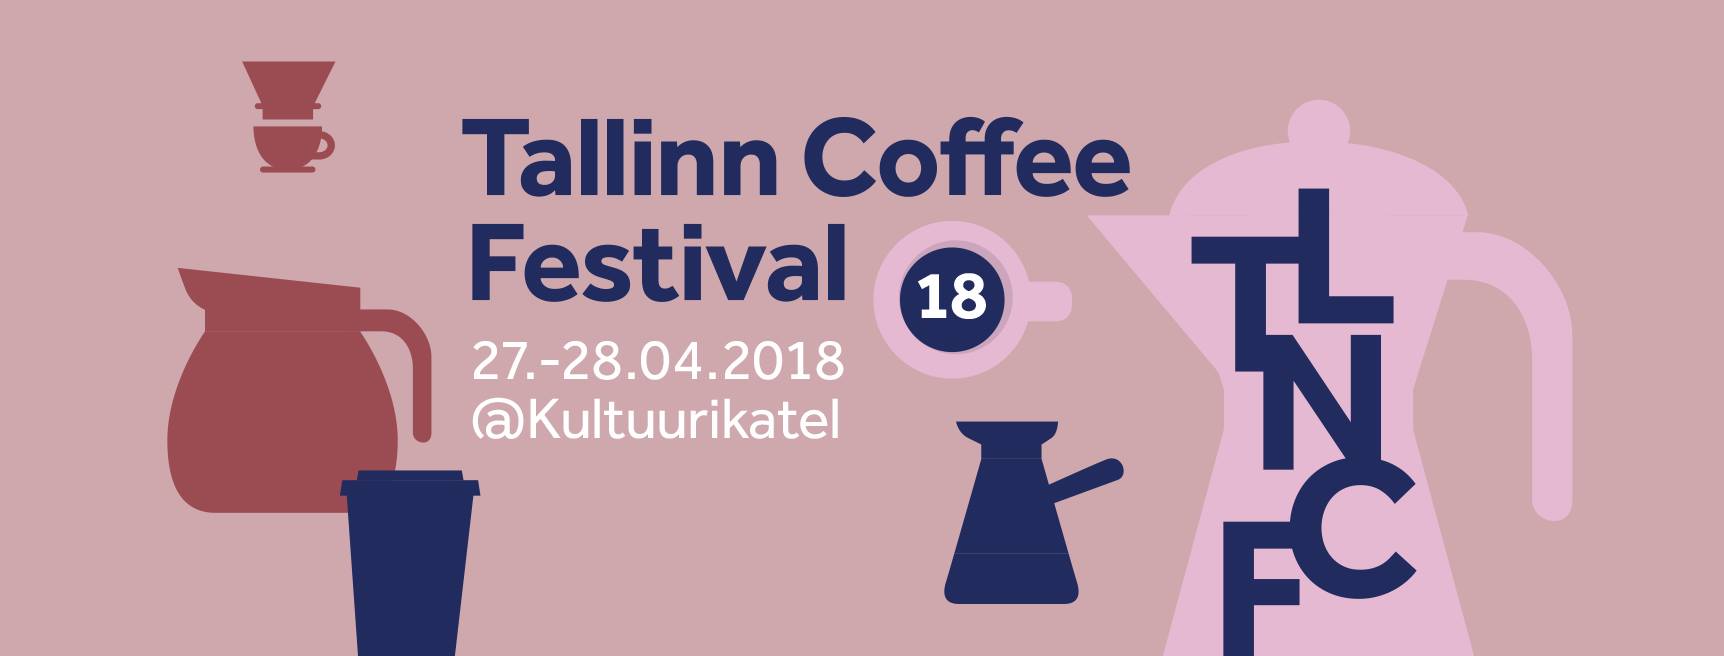 6063Tallinn Coffee Festival 2018